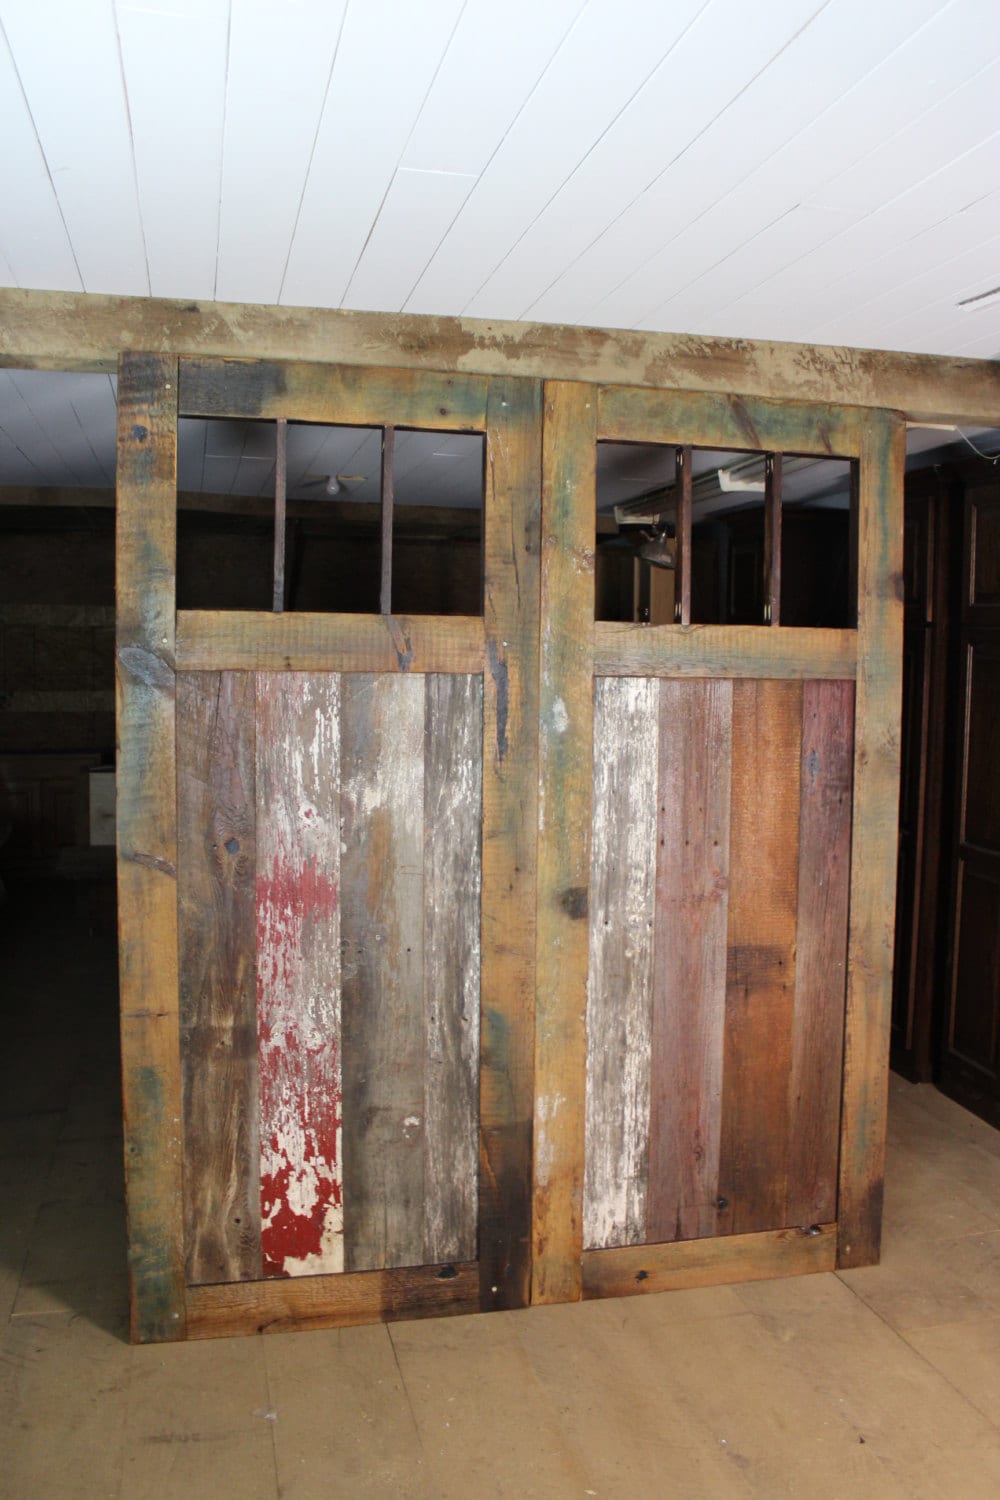 Barn Doors with Lower X Brace Made of Reclaimed Barn Wood - Whatman  Hardwoods